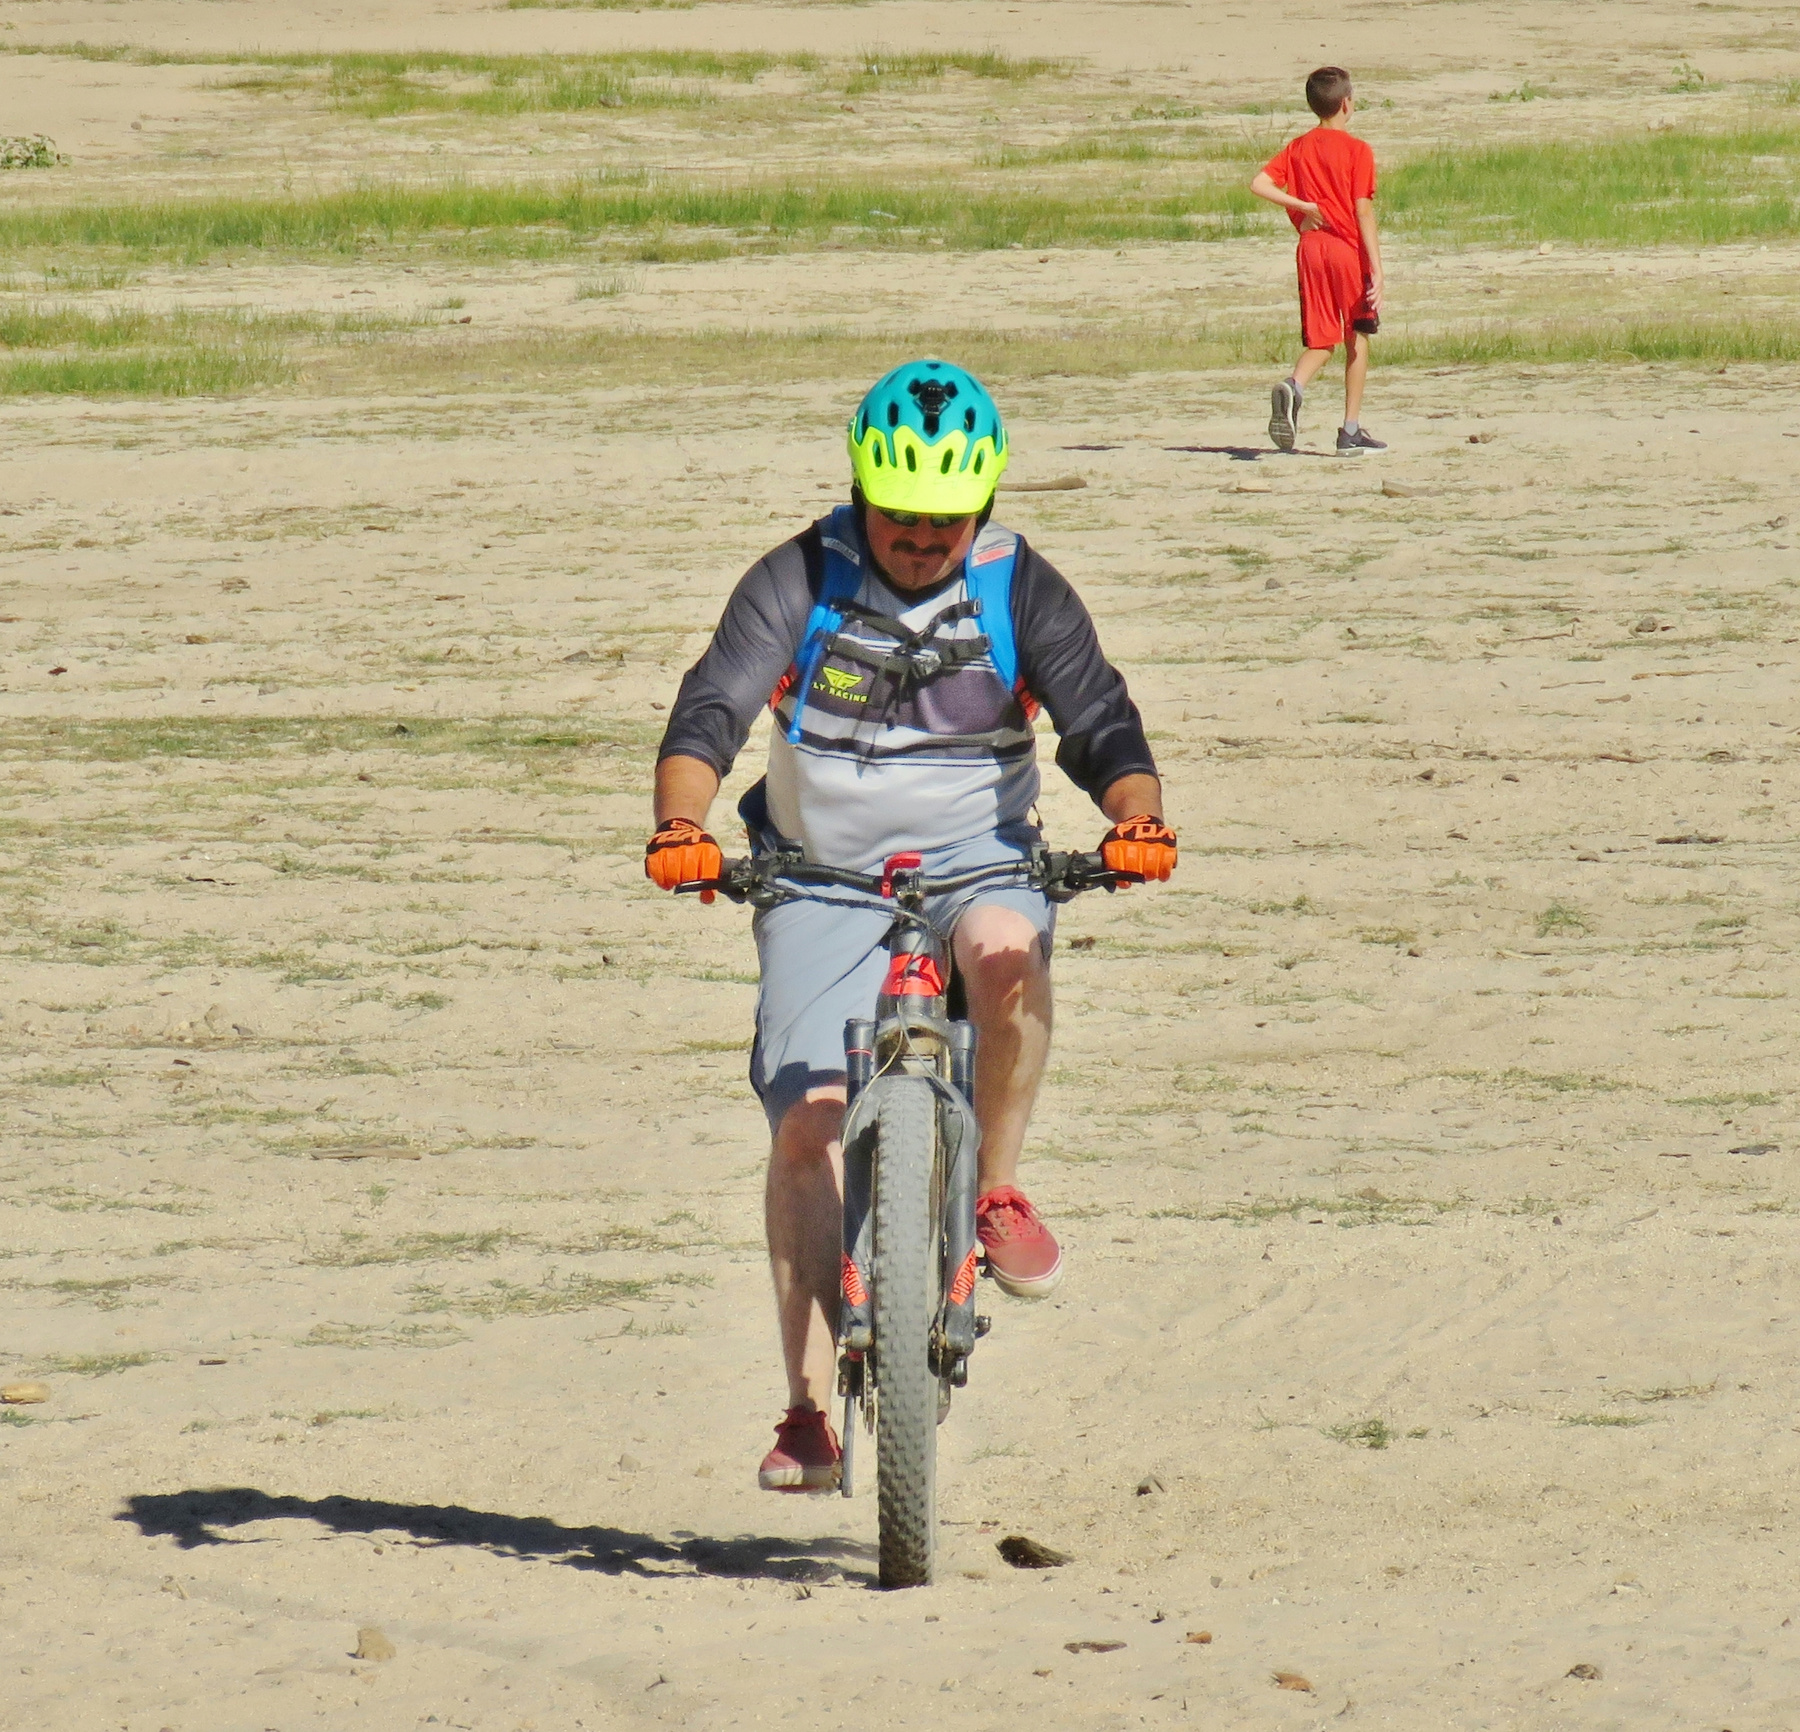 Велосипедист велосипед велосипедист спорт спортсмен ехать кататься мужчина пляж транспорт bicycle cycle bike vehicle cyclist bicyclist sport sportsman man beach